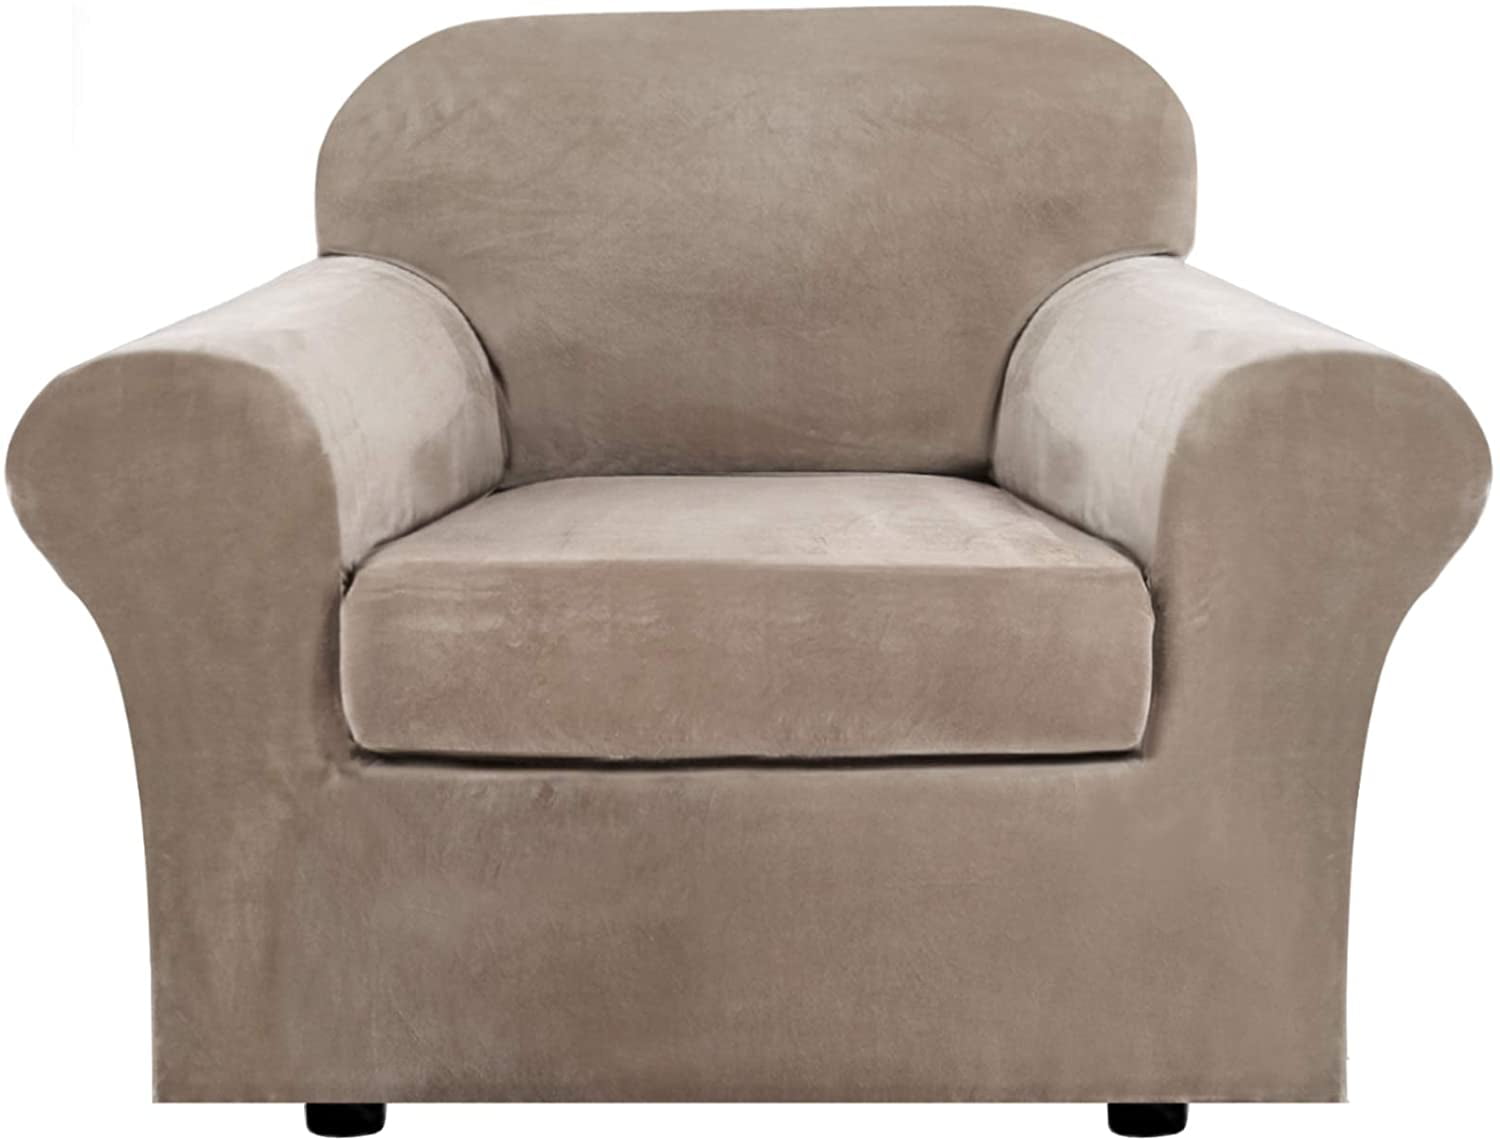 H.VERSAILTEX Stretch Velvet Armchair Cover Couch Covers 1 Cushion Chair Slipcove